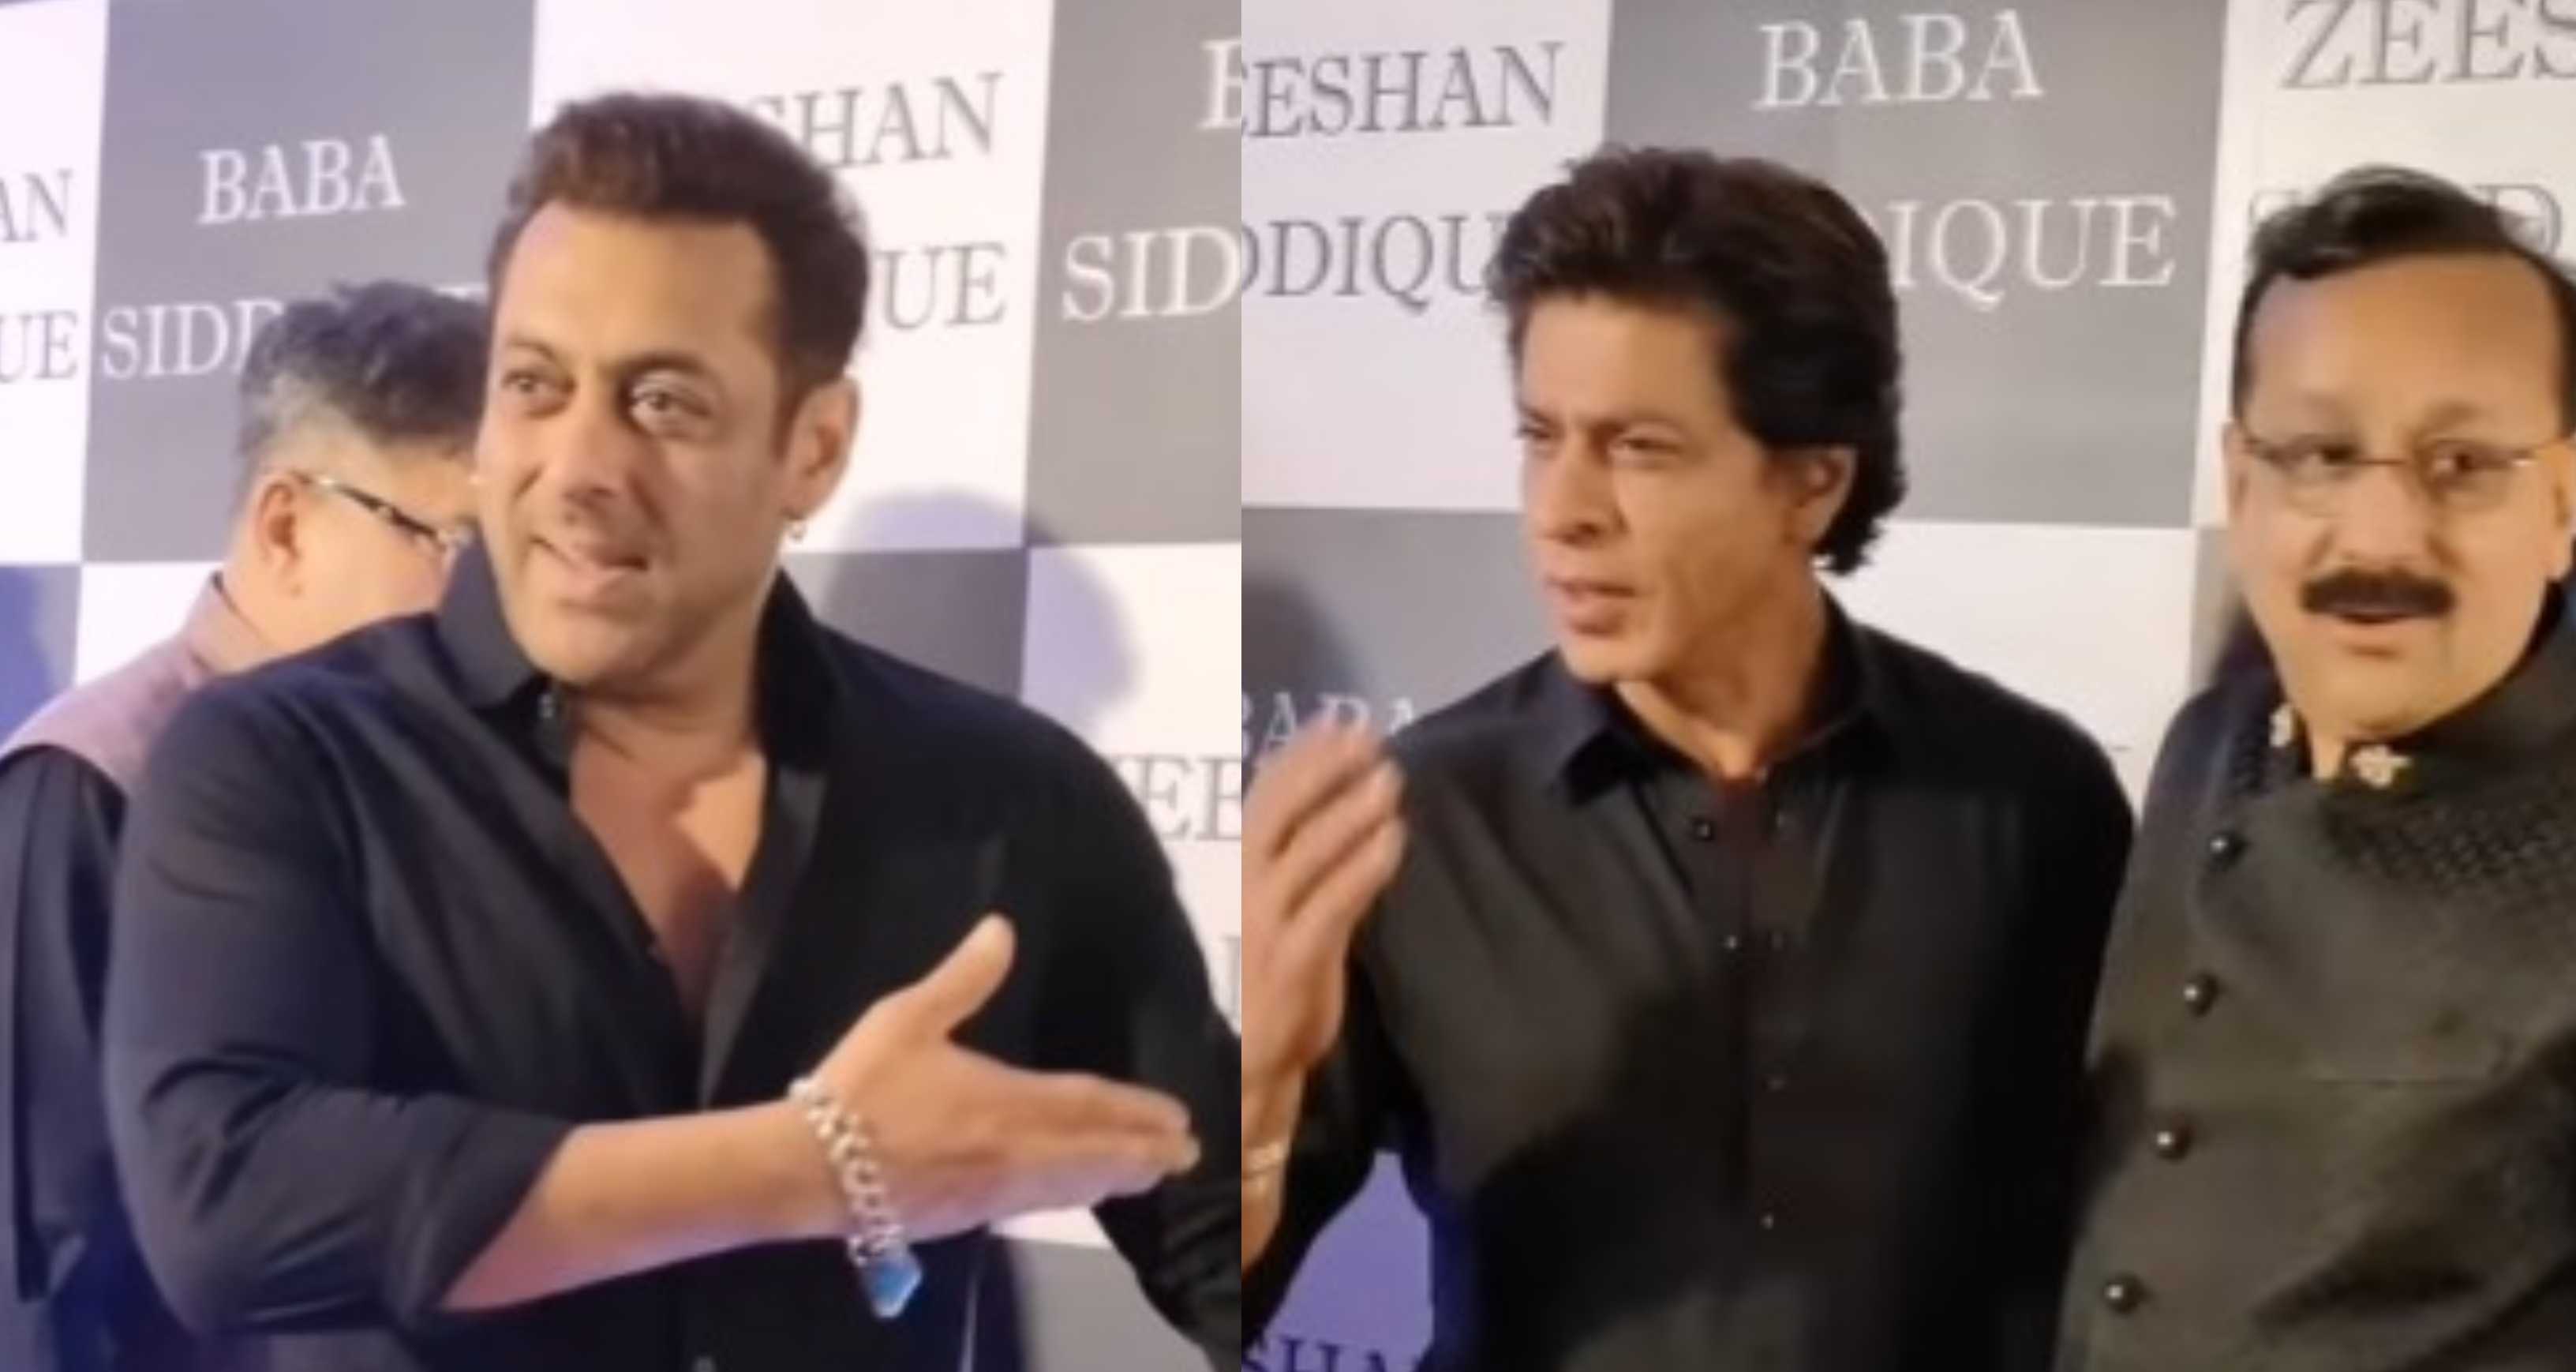 Shah Rukh Khan, Salman Khan look dapper in black at Baba Siddiqui's Iftaar party; Shehnaaz, Tejasswi & Karan dazzle